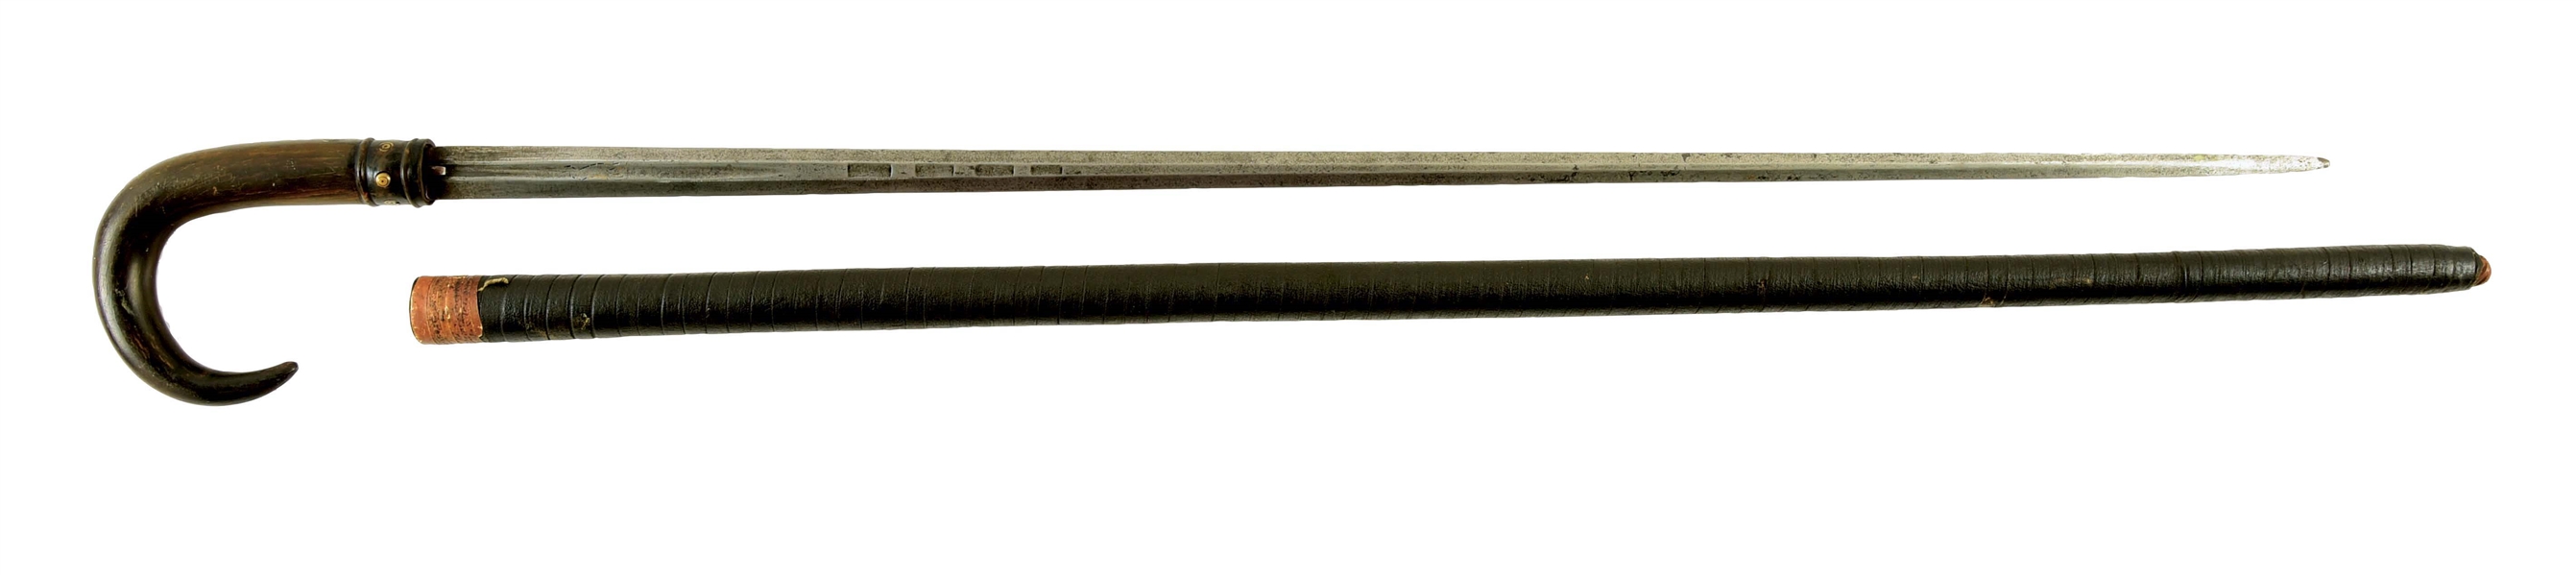 SWORD CANE WITH 17TH CENTURY PASSAU-WOLF MARKED RAPIER BLADE 